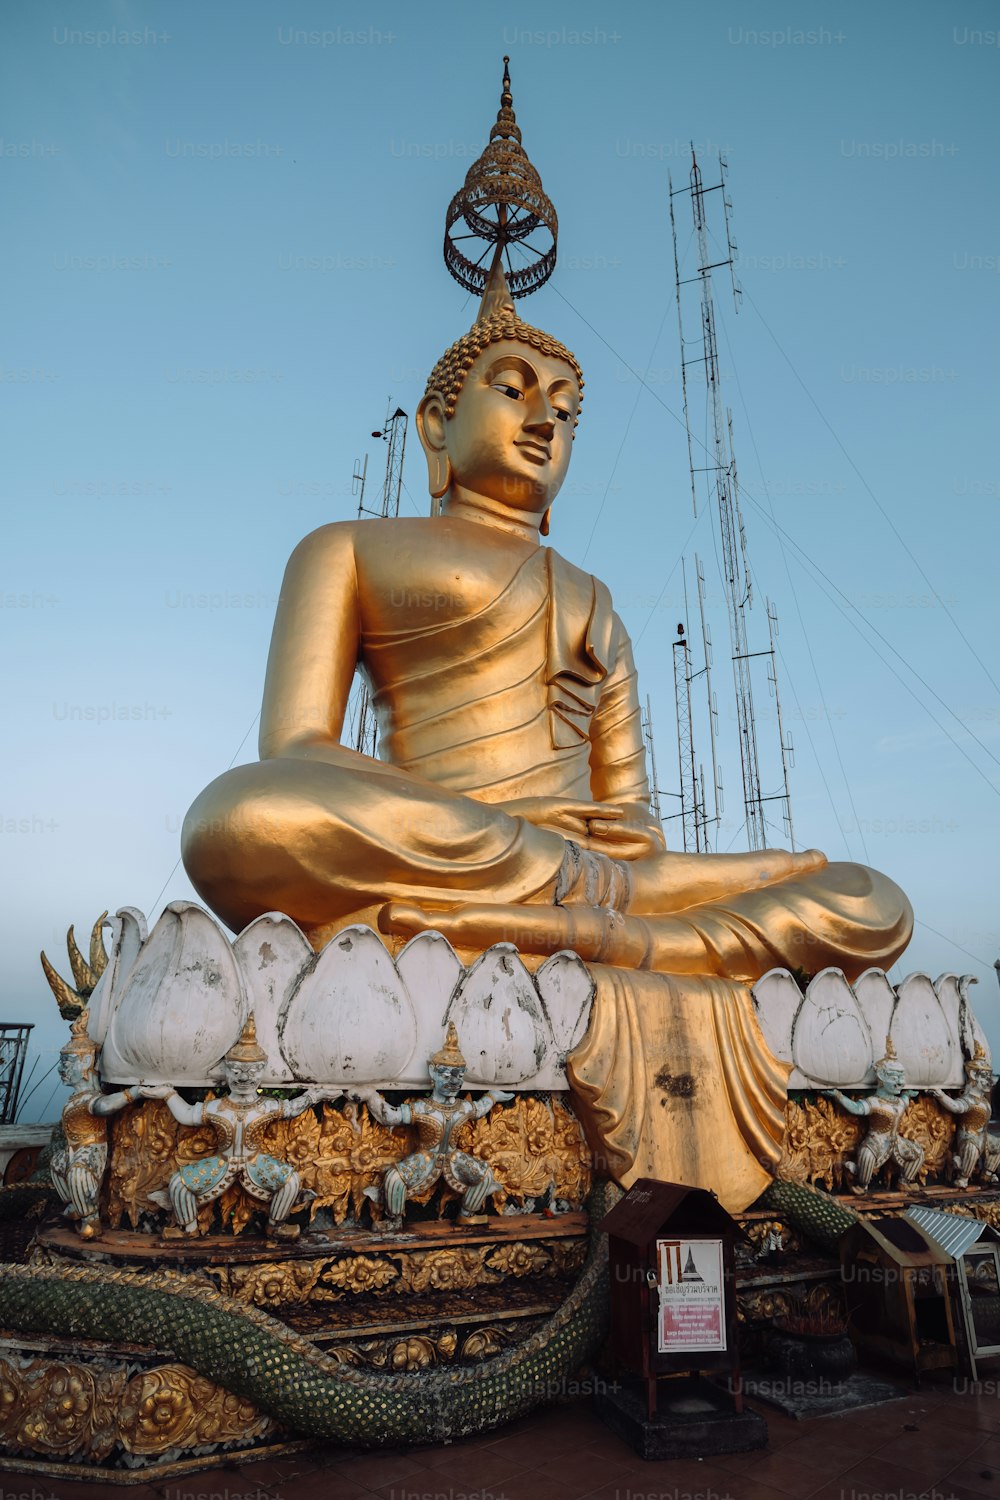 Una gran estatua dorada de Buda sentada encima de una mesa